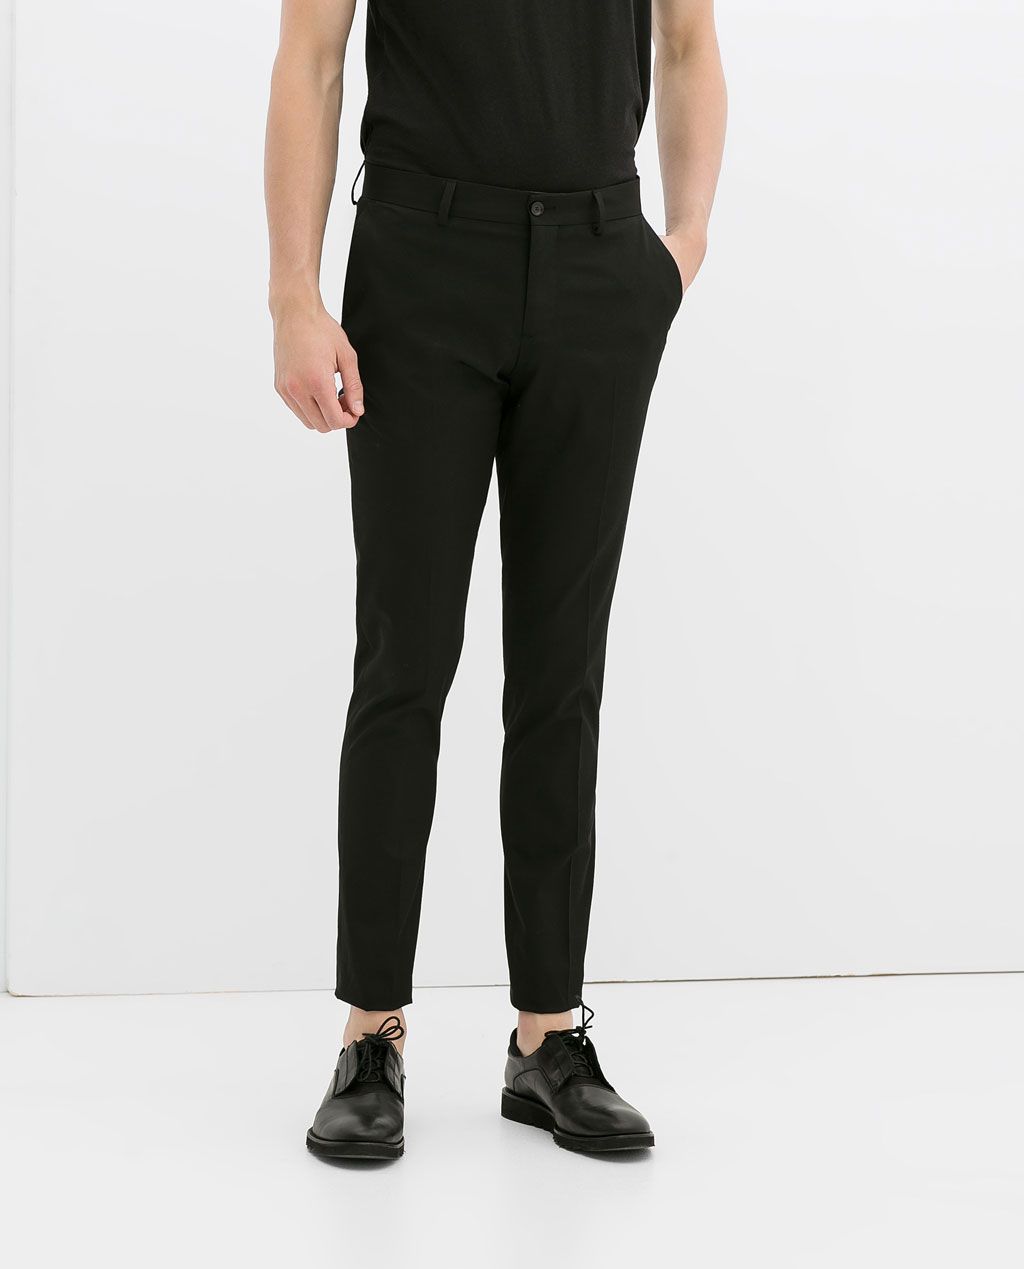 Pantalon Homme Noir - Zara - Pickture